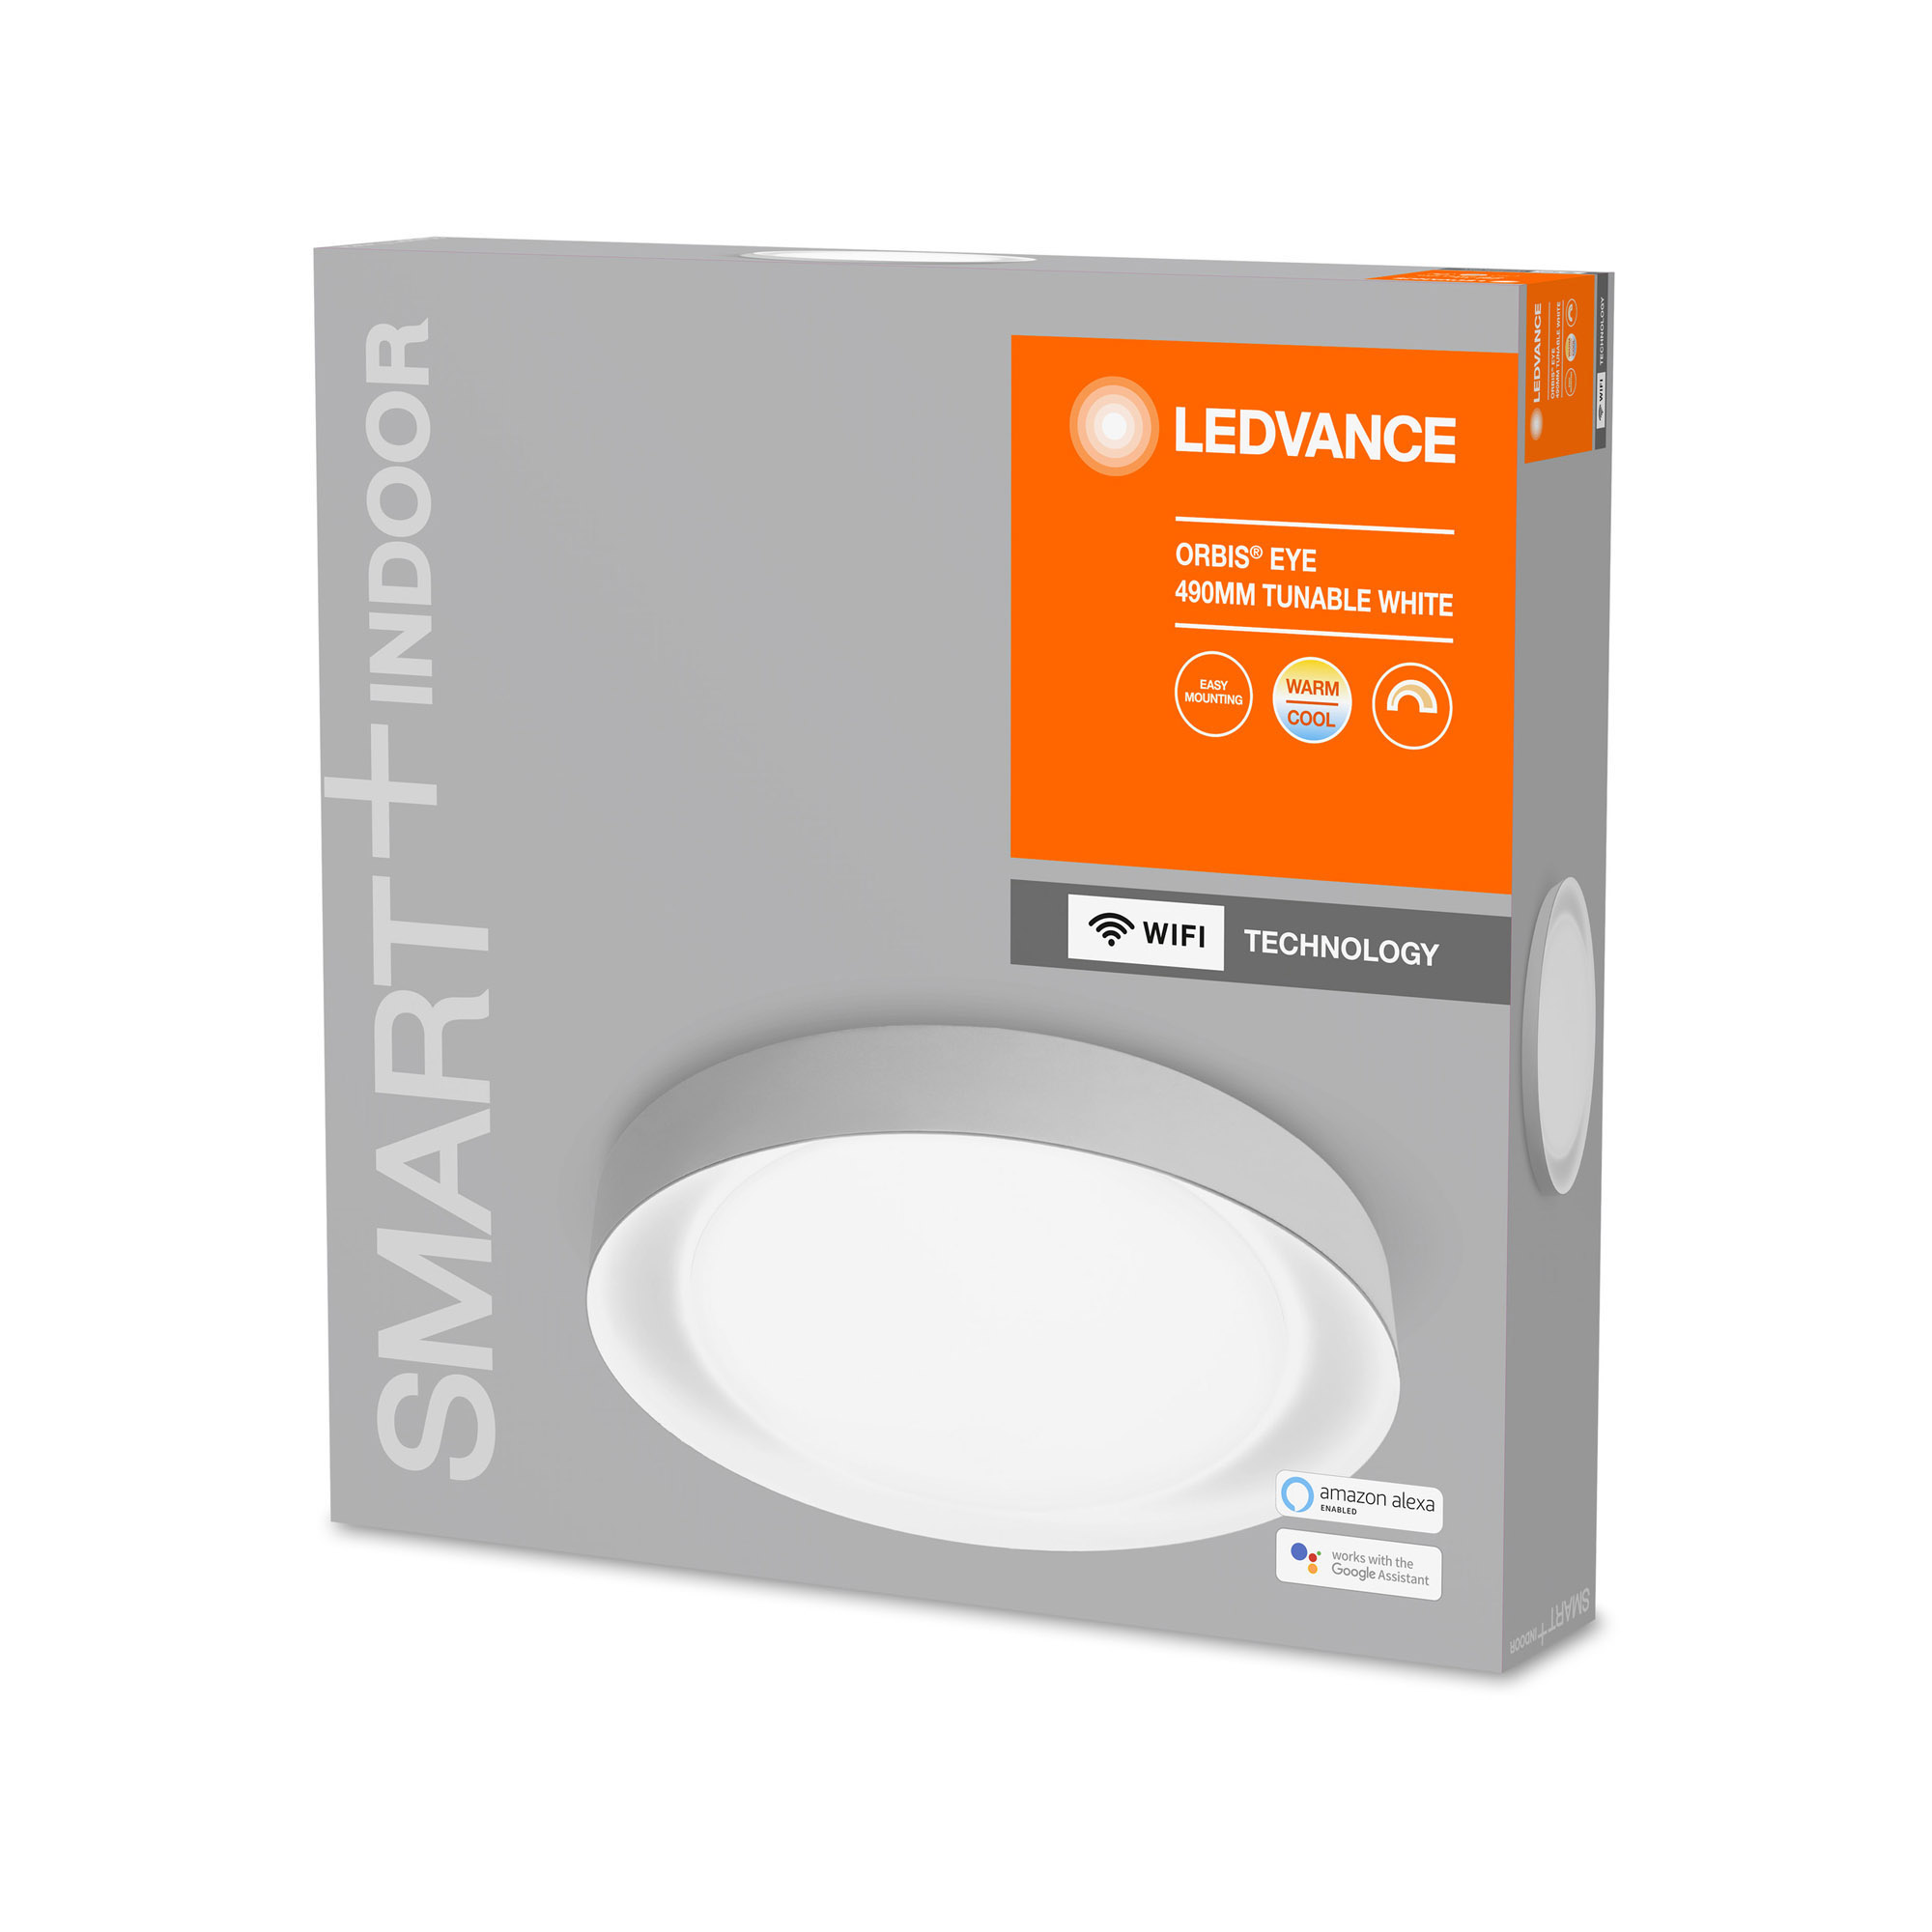 LEDVANCE SMART+ WiFi Tunable White LED Ceiling Light ORBIS Eye 490mm grey 3300lm